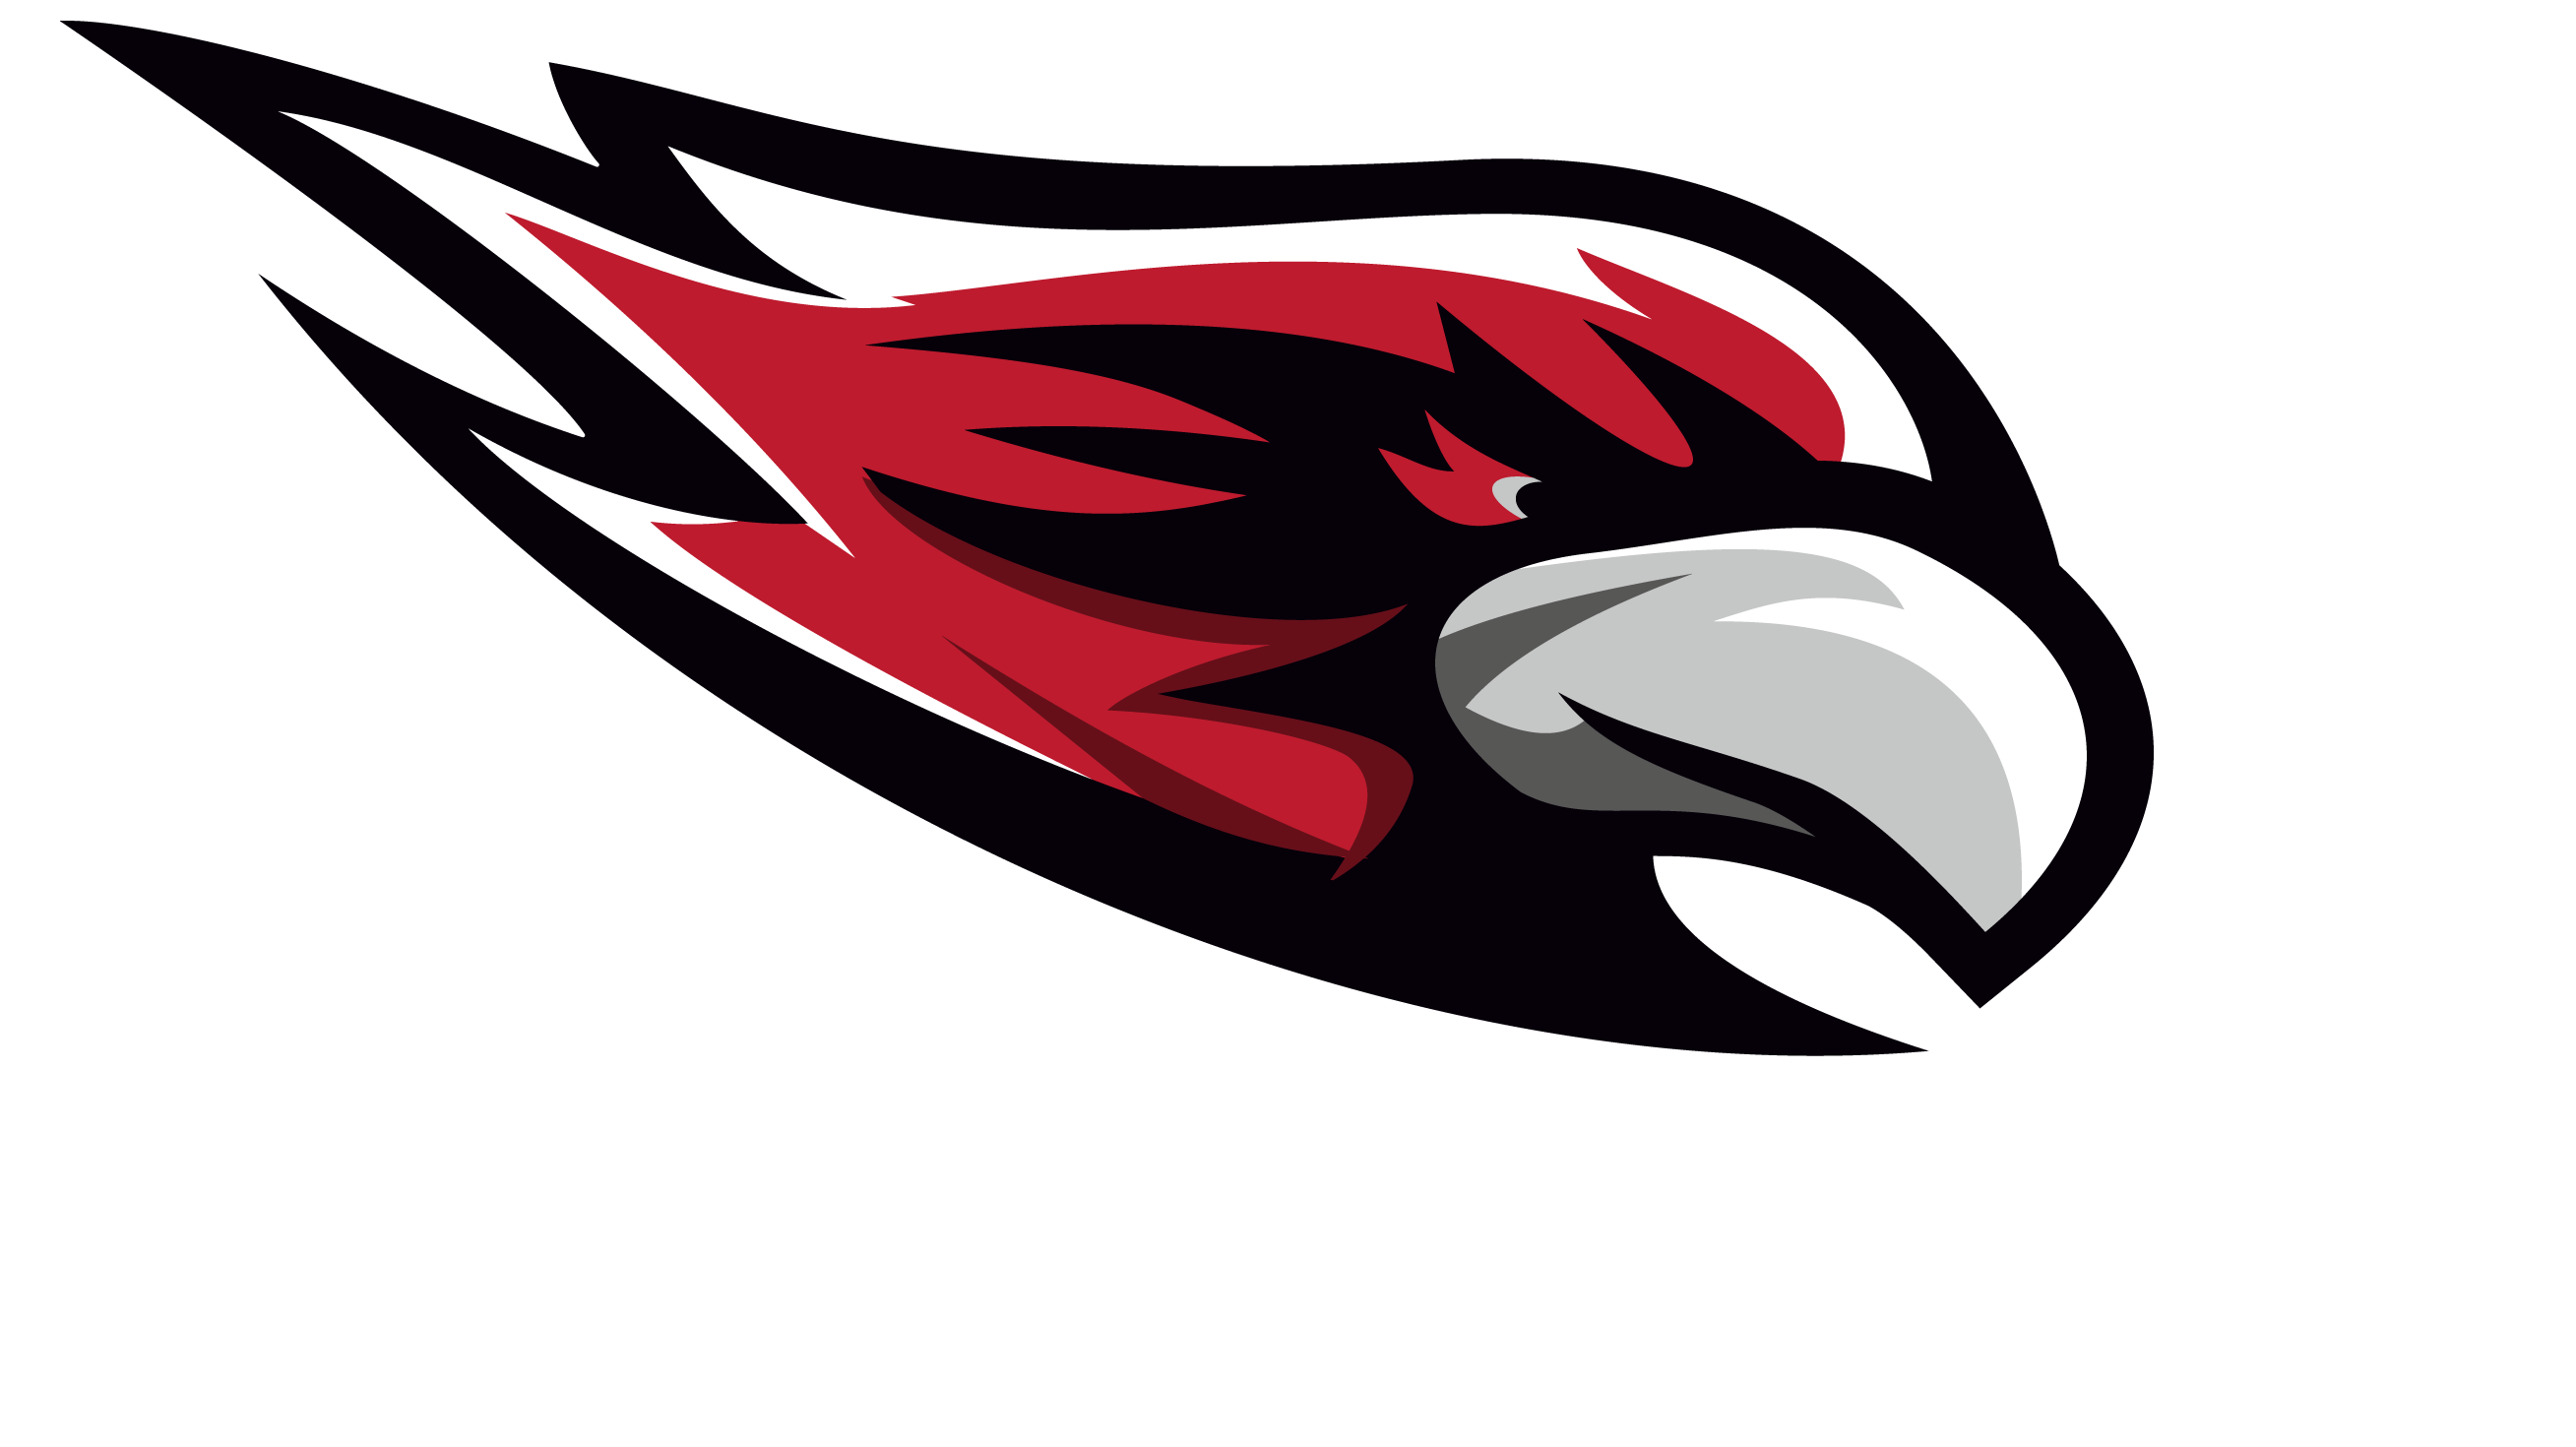 White Hawks Logo - The White Hawks